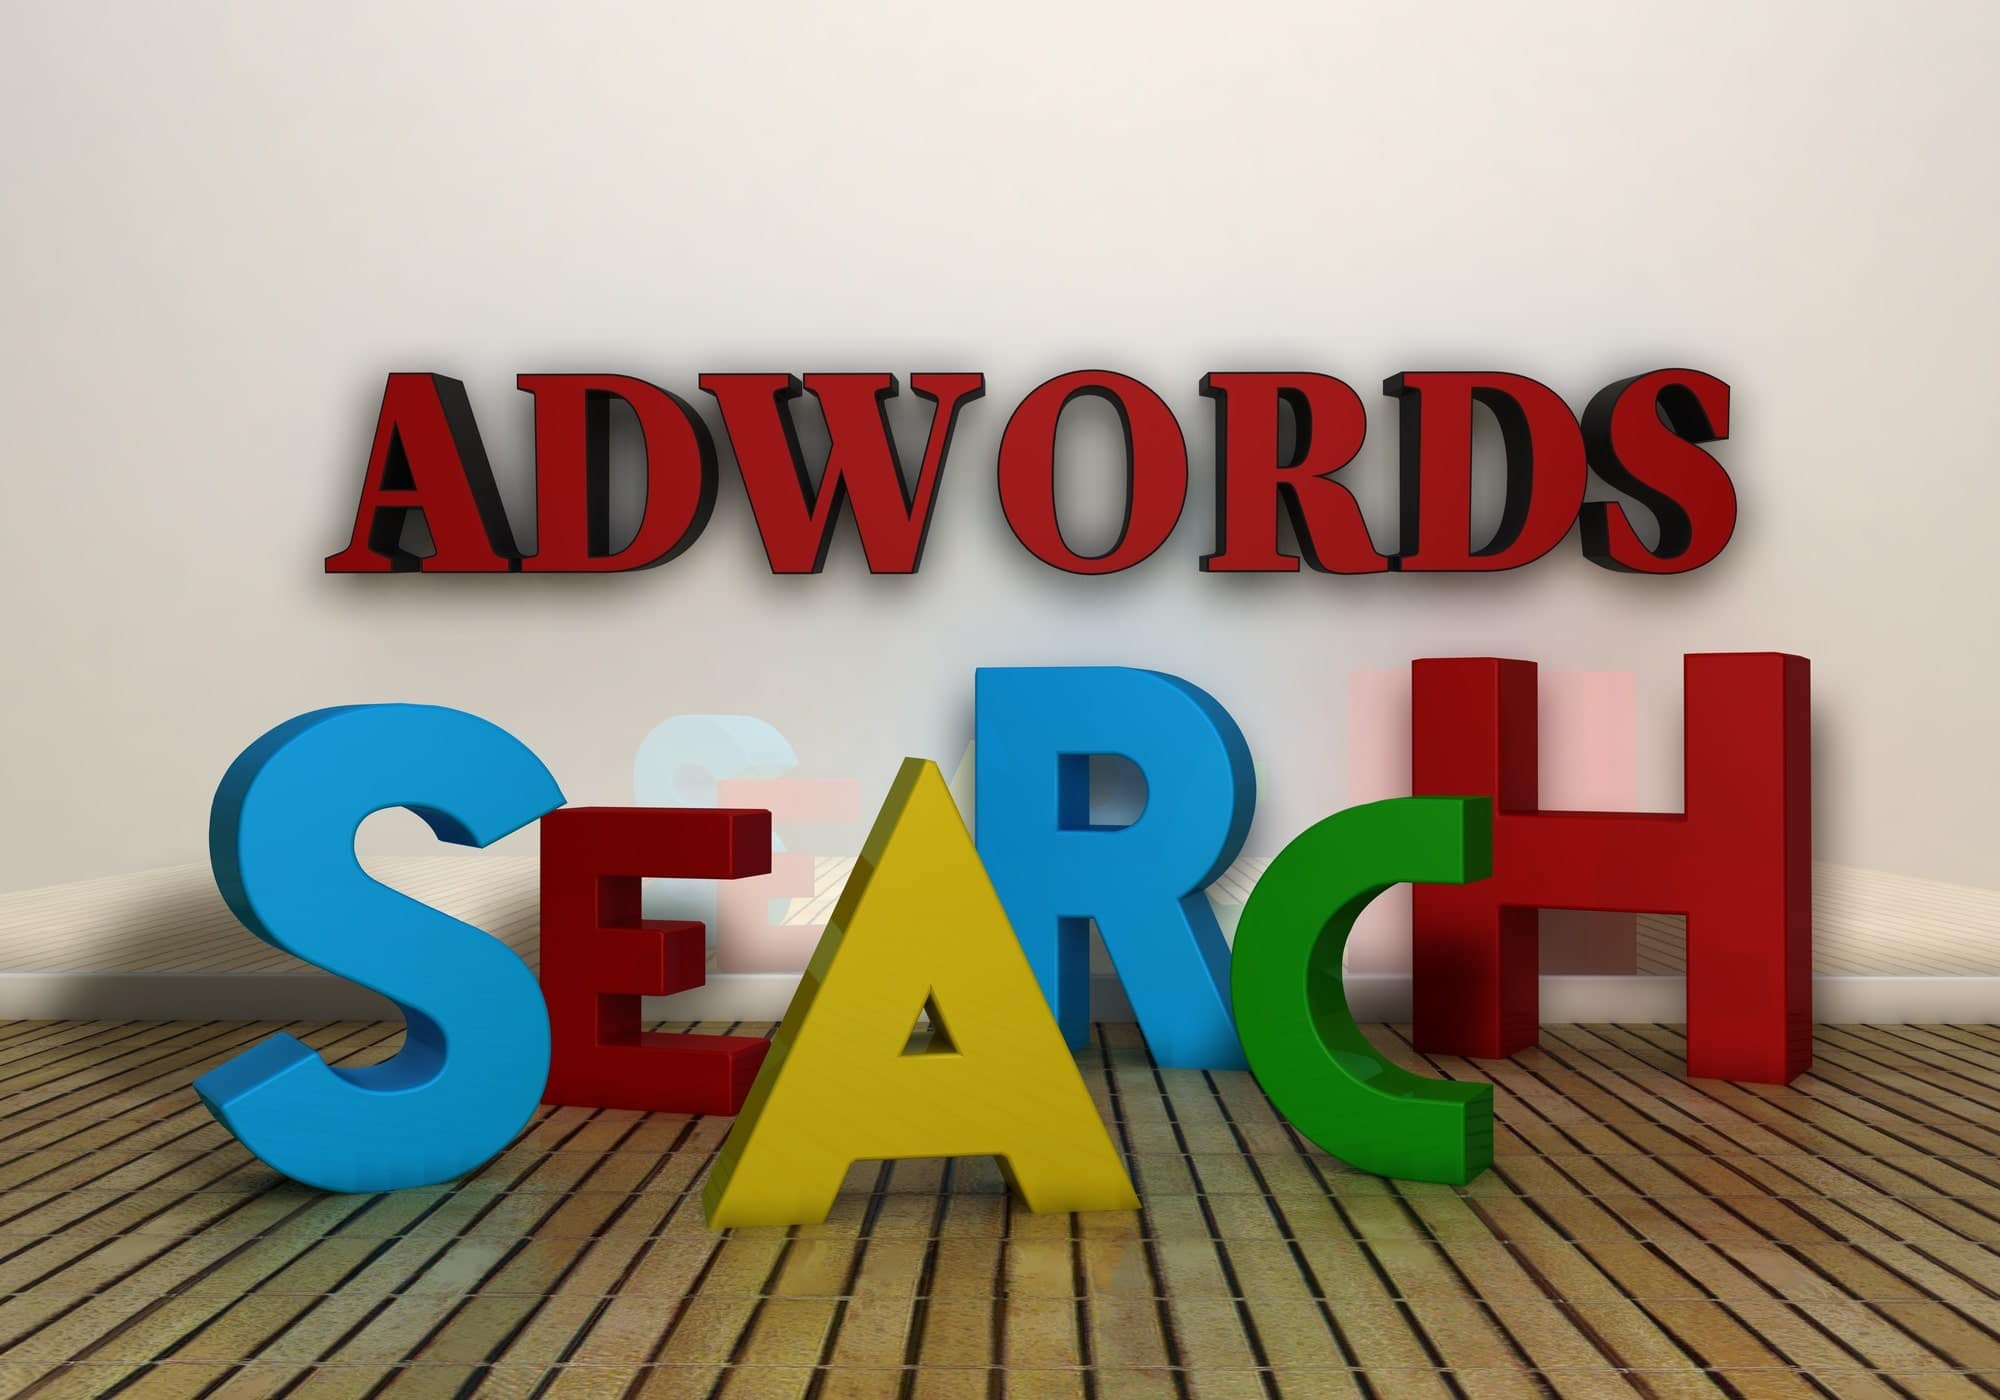 Google AdWords Search